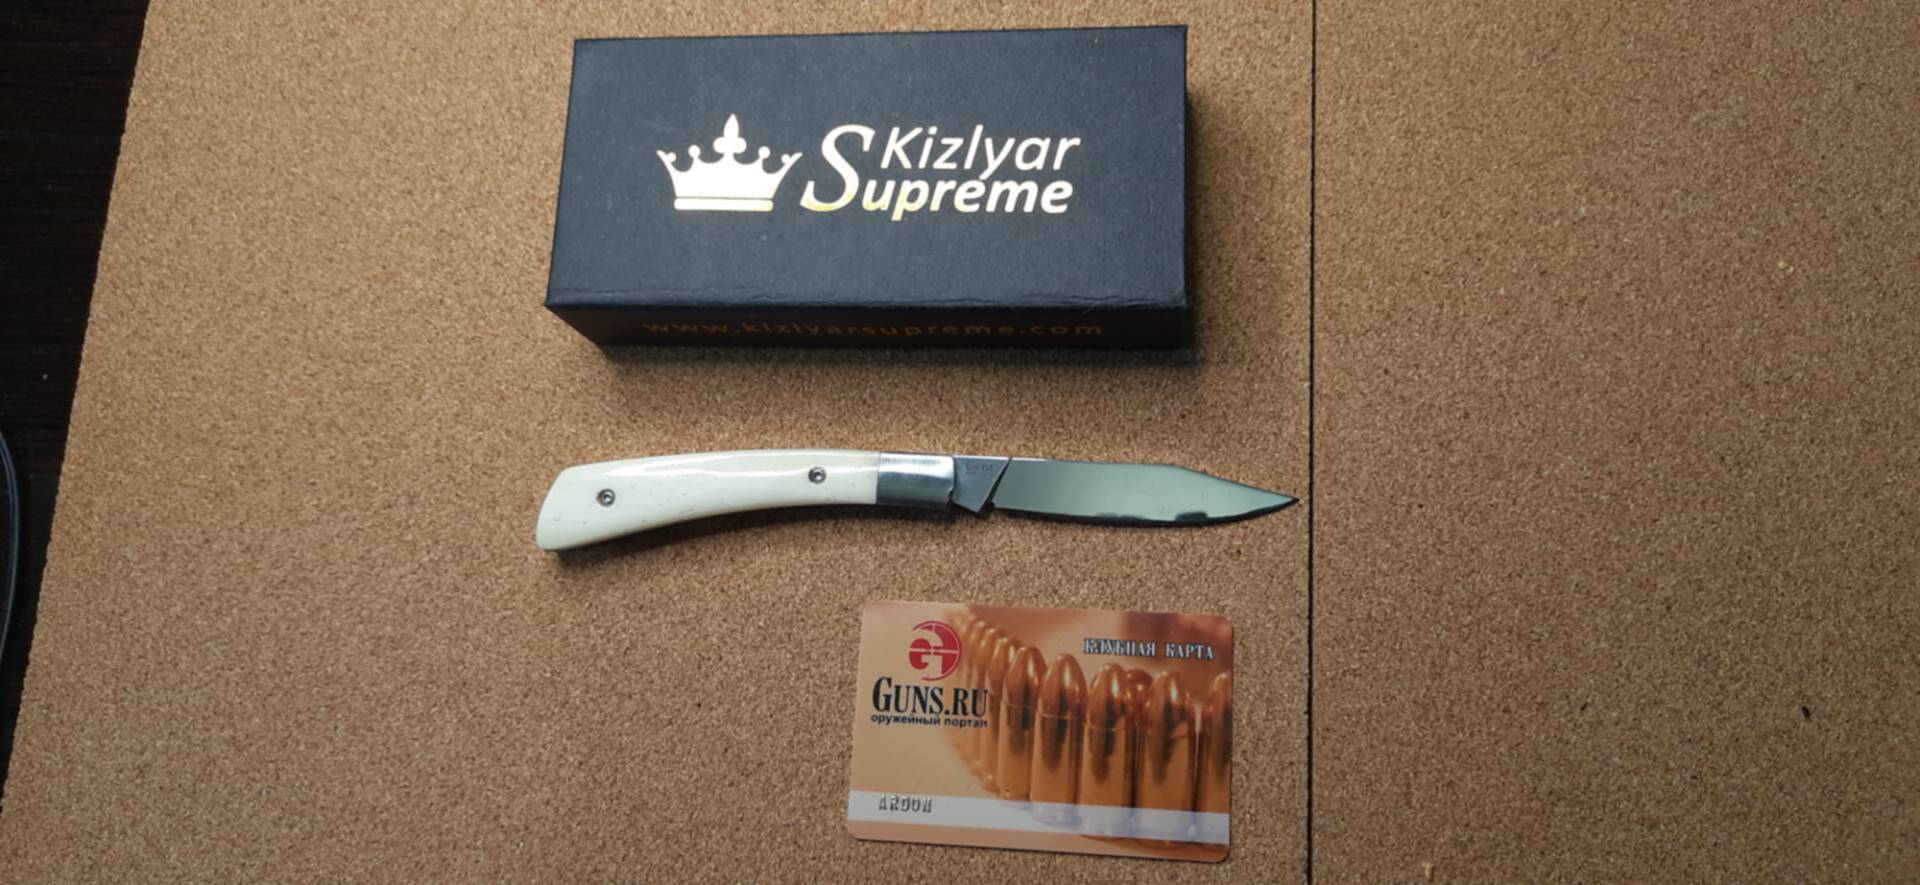 Luxe sale нож. Распродажа ножей в связи с закрытием. YJ; Luxe sale нож.